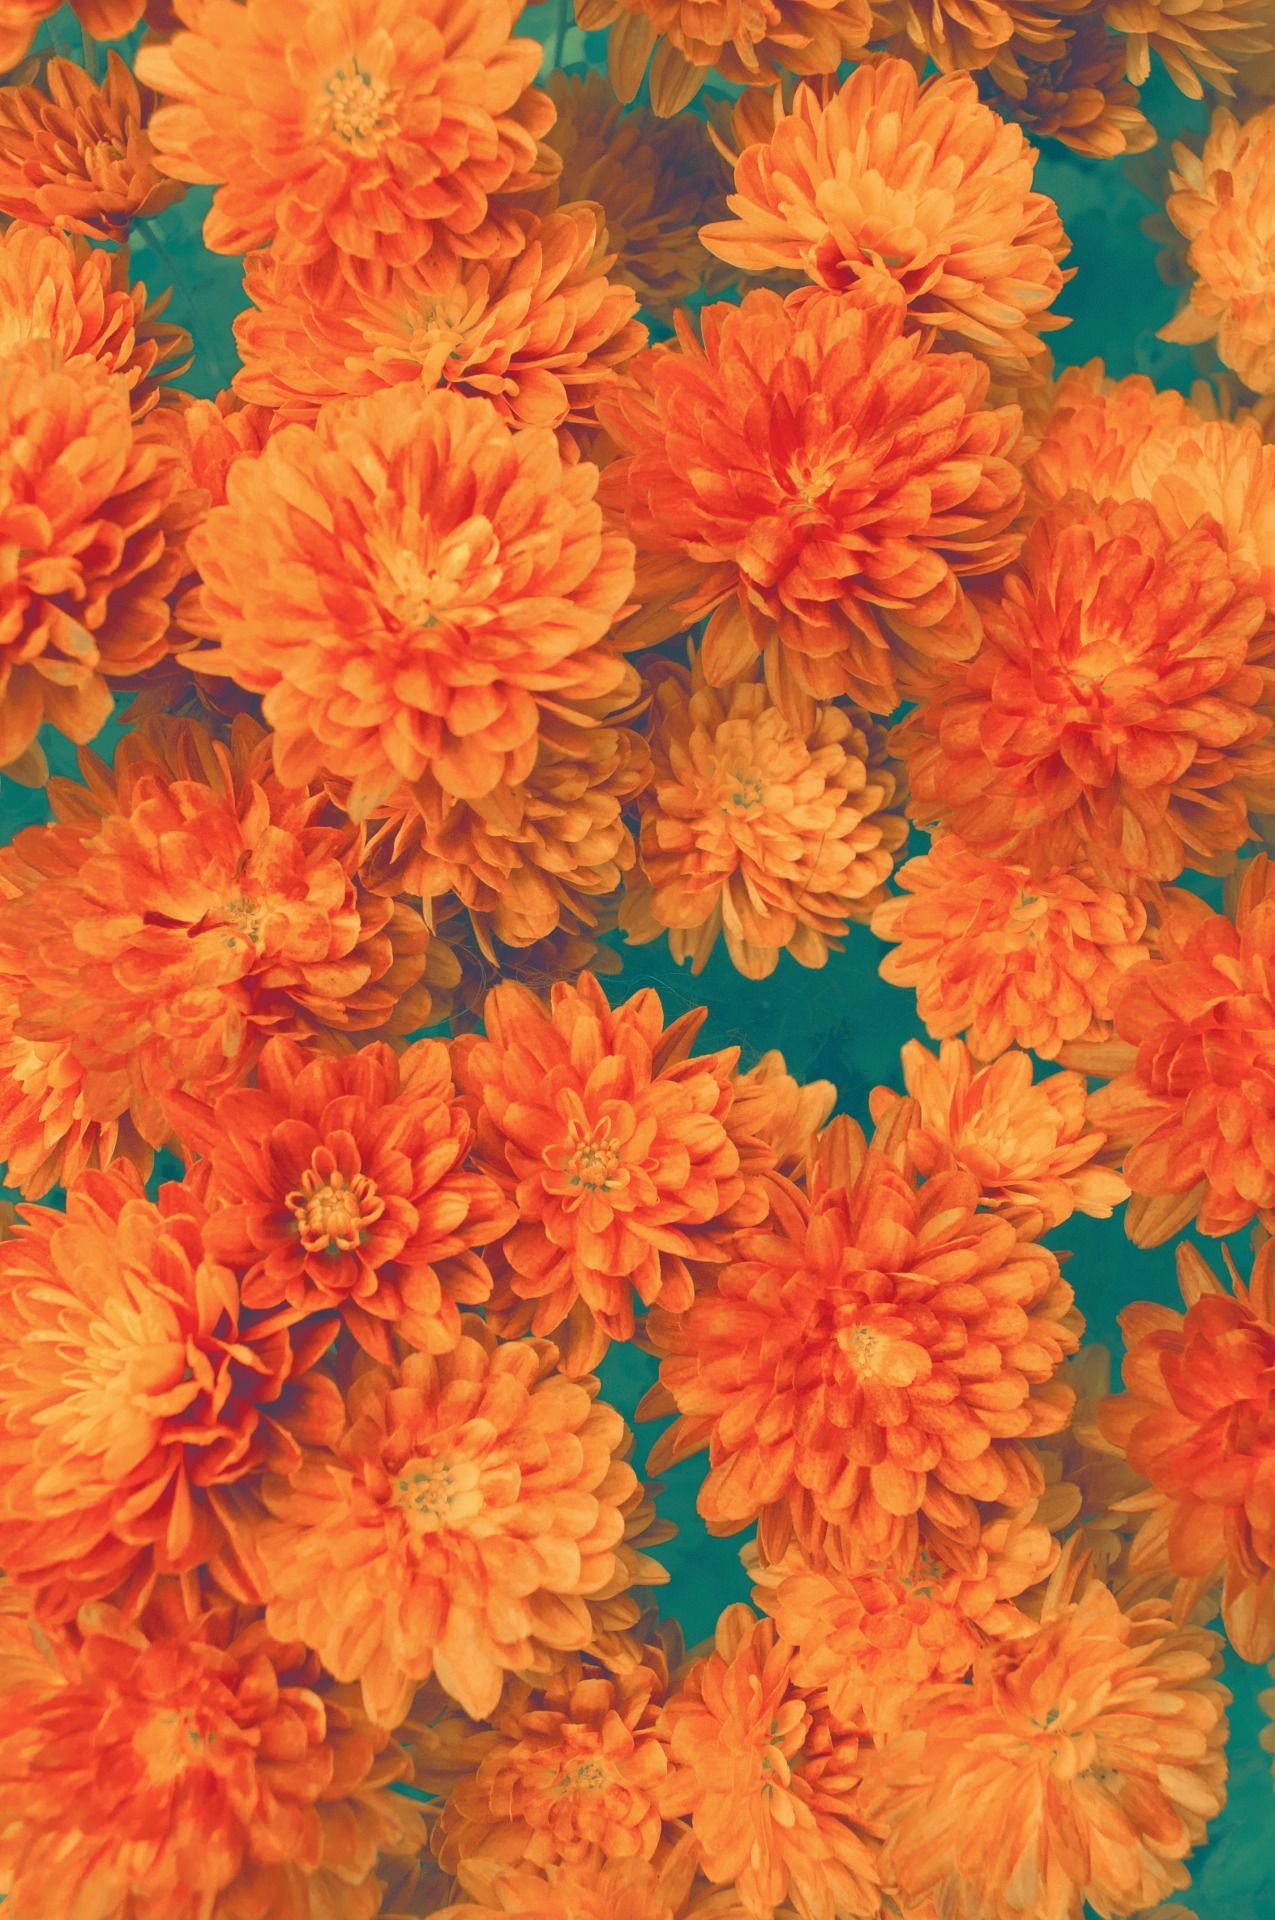 Orange paint aesthetic Wallpaper Download